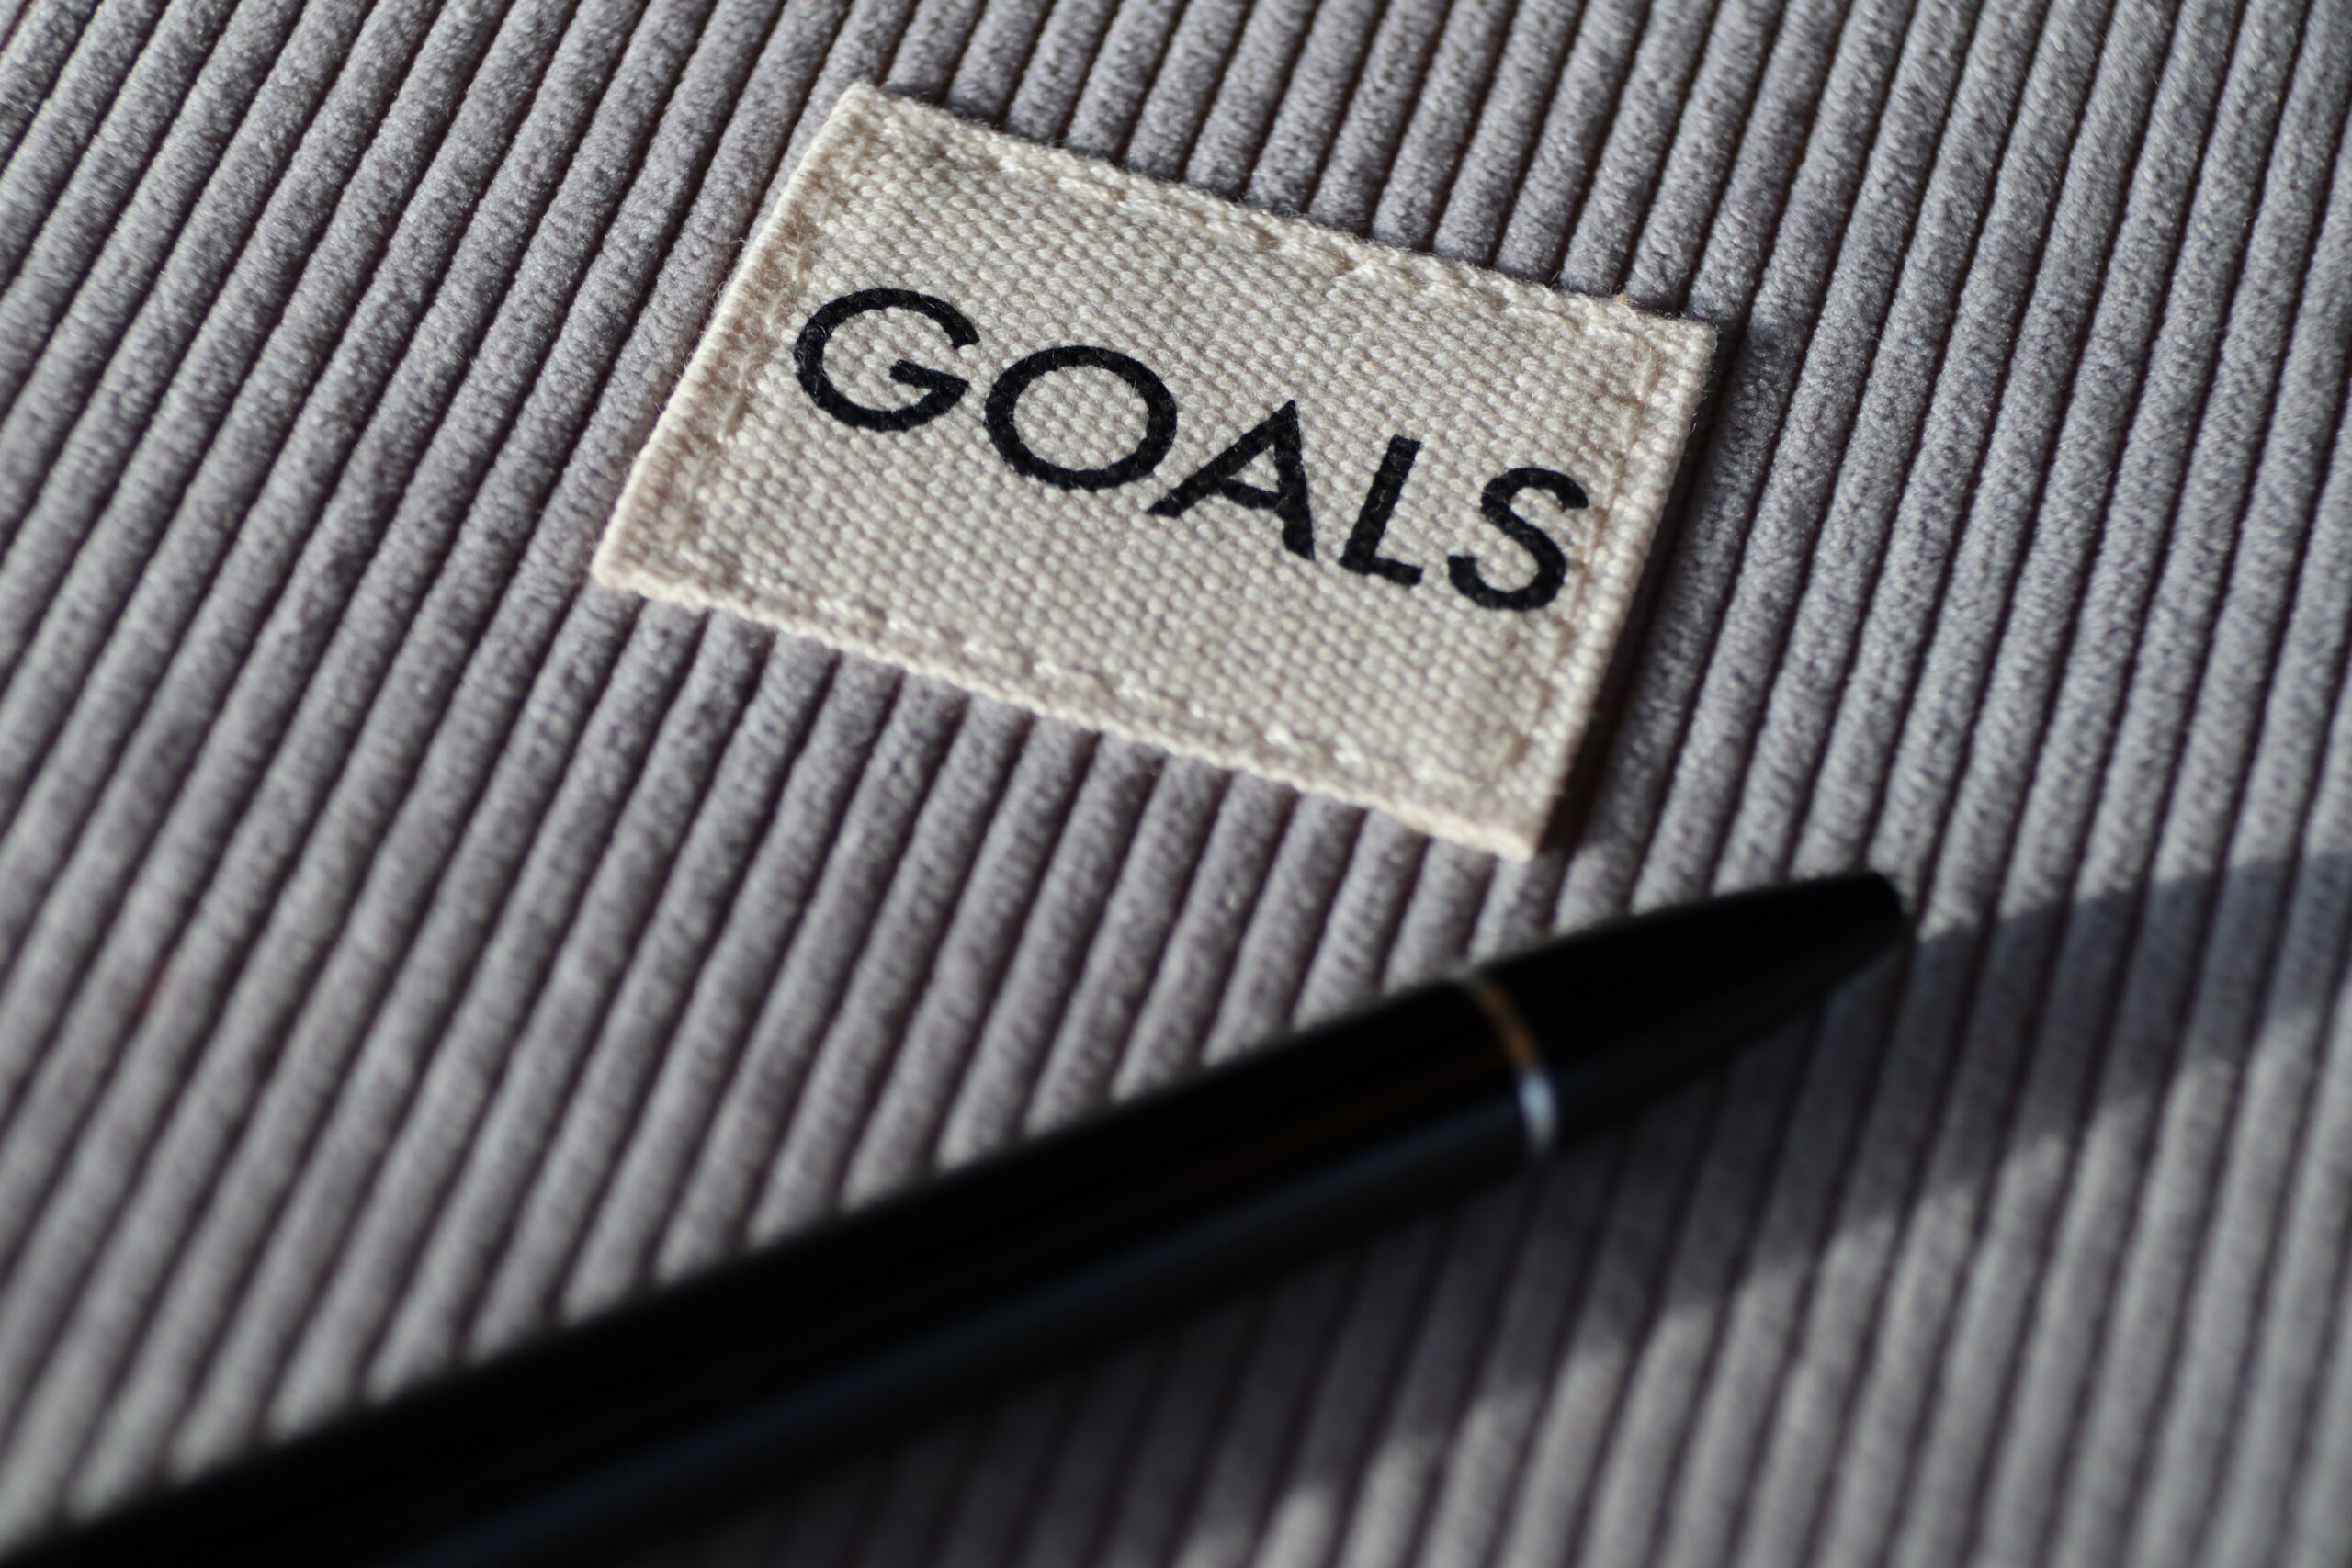 Planning Your Goals